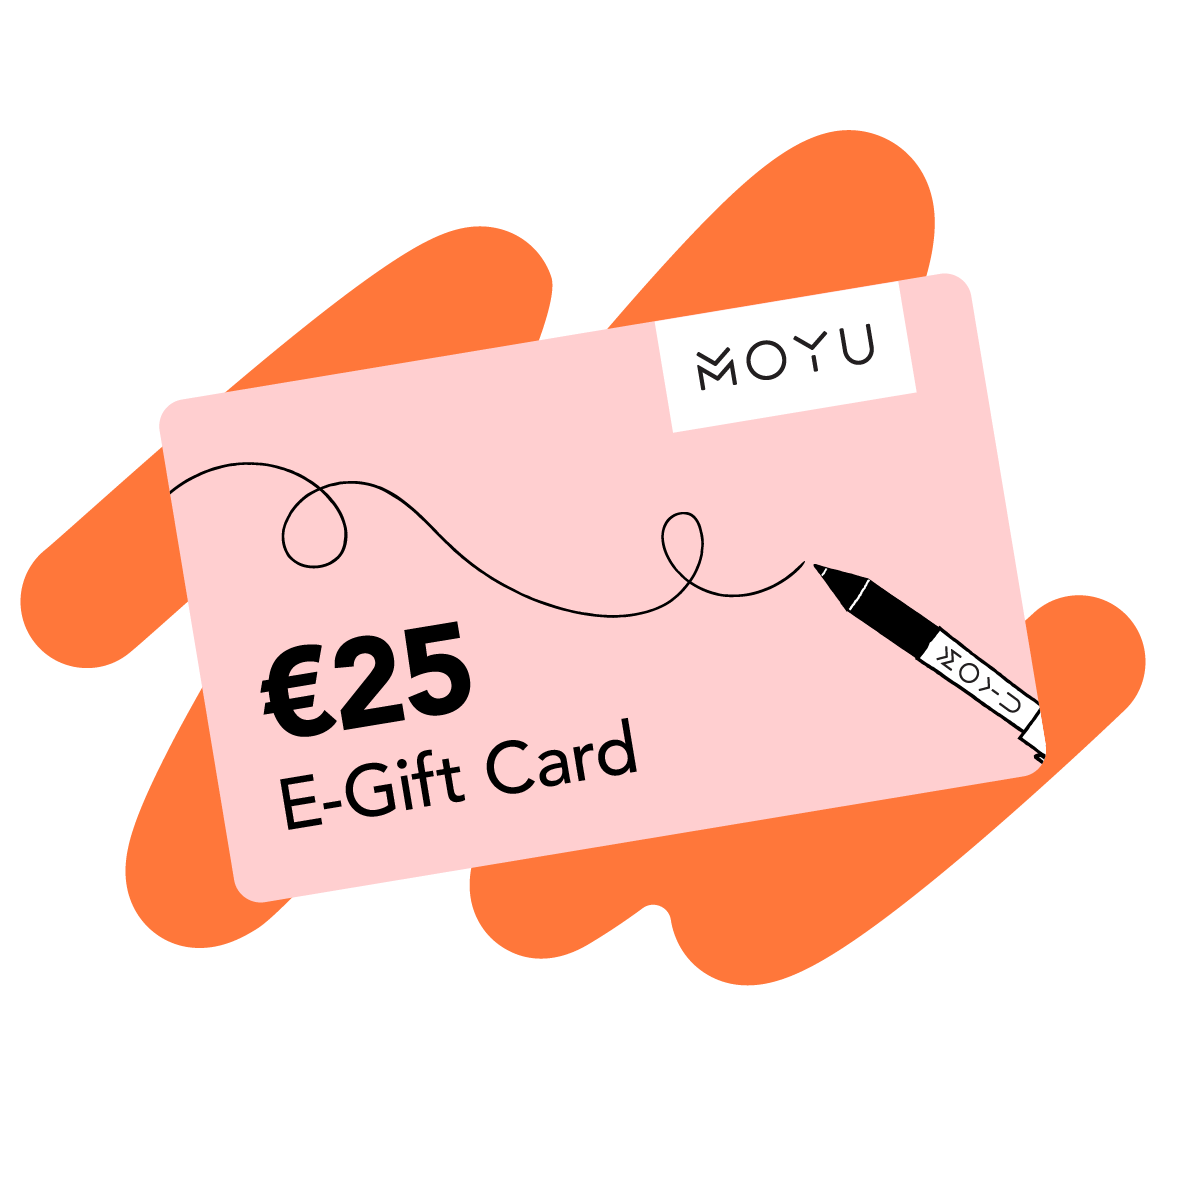 moyu-gift-card-25-euros